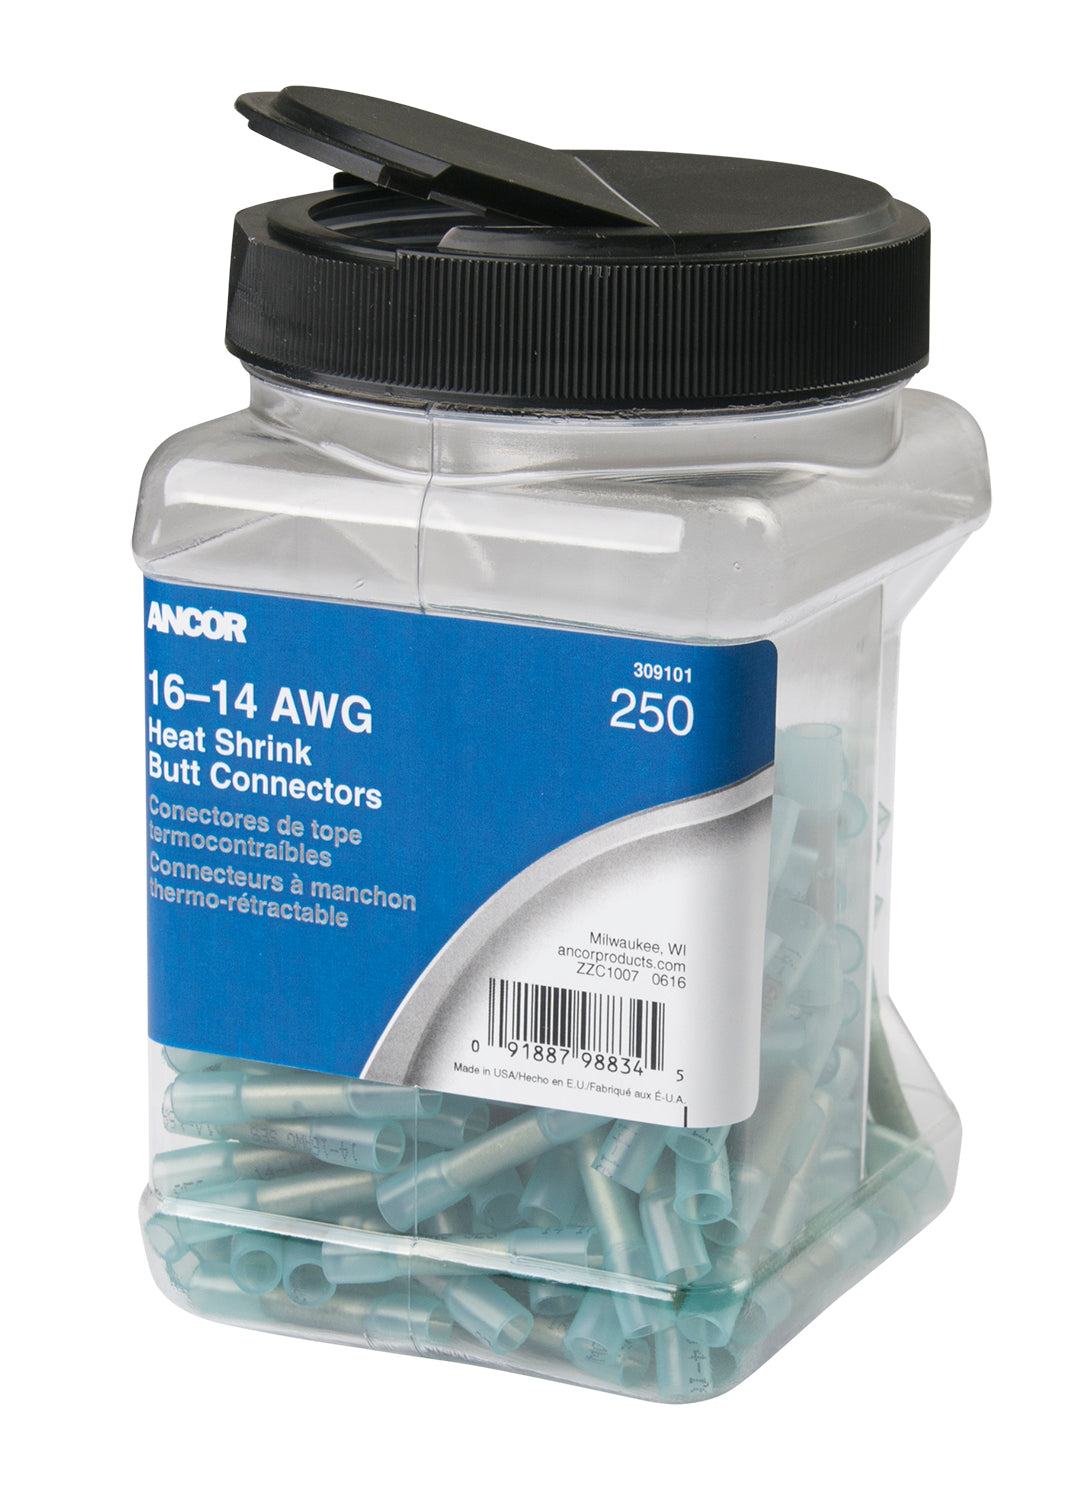 Ancor 16-14 AWG Heat Shrink Butt Connector - 250-Pieces - Jar [309101]